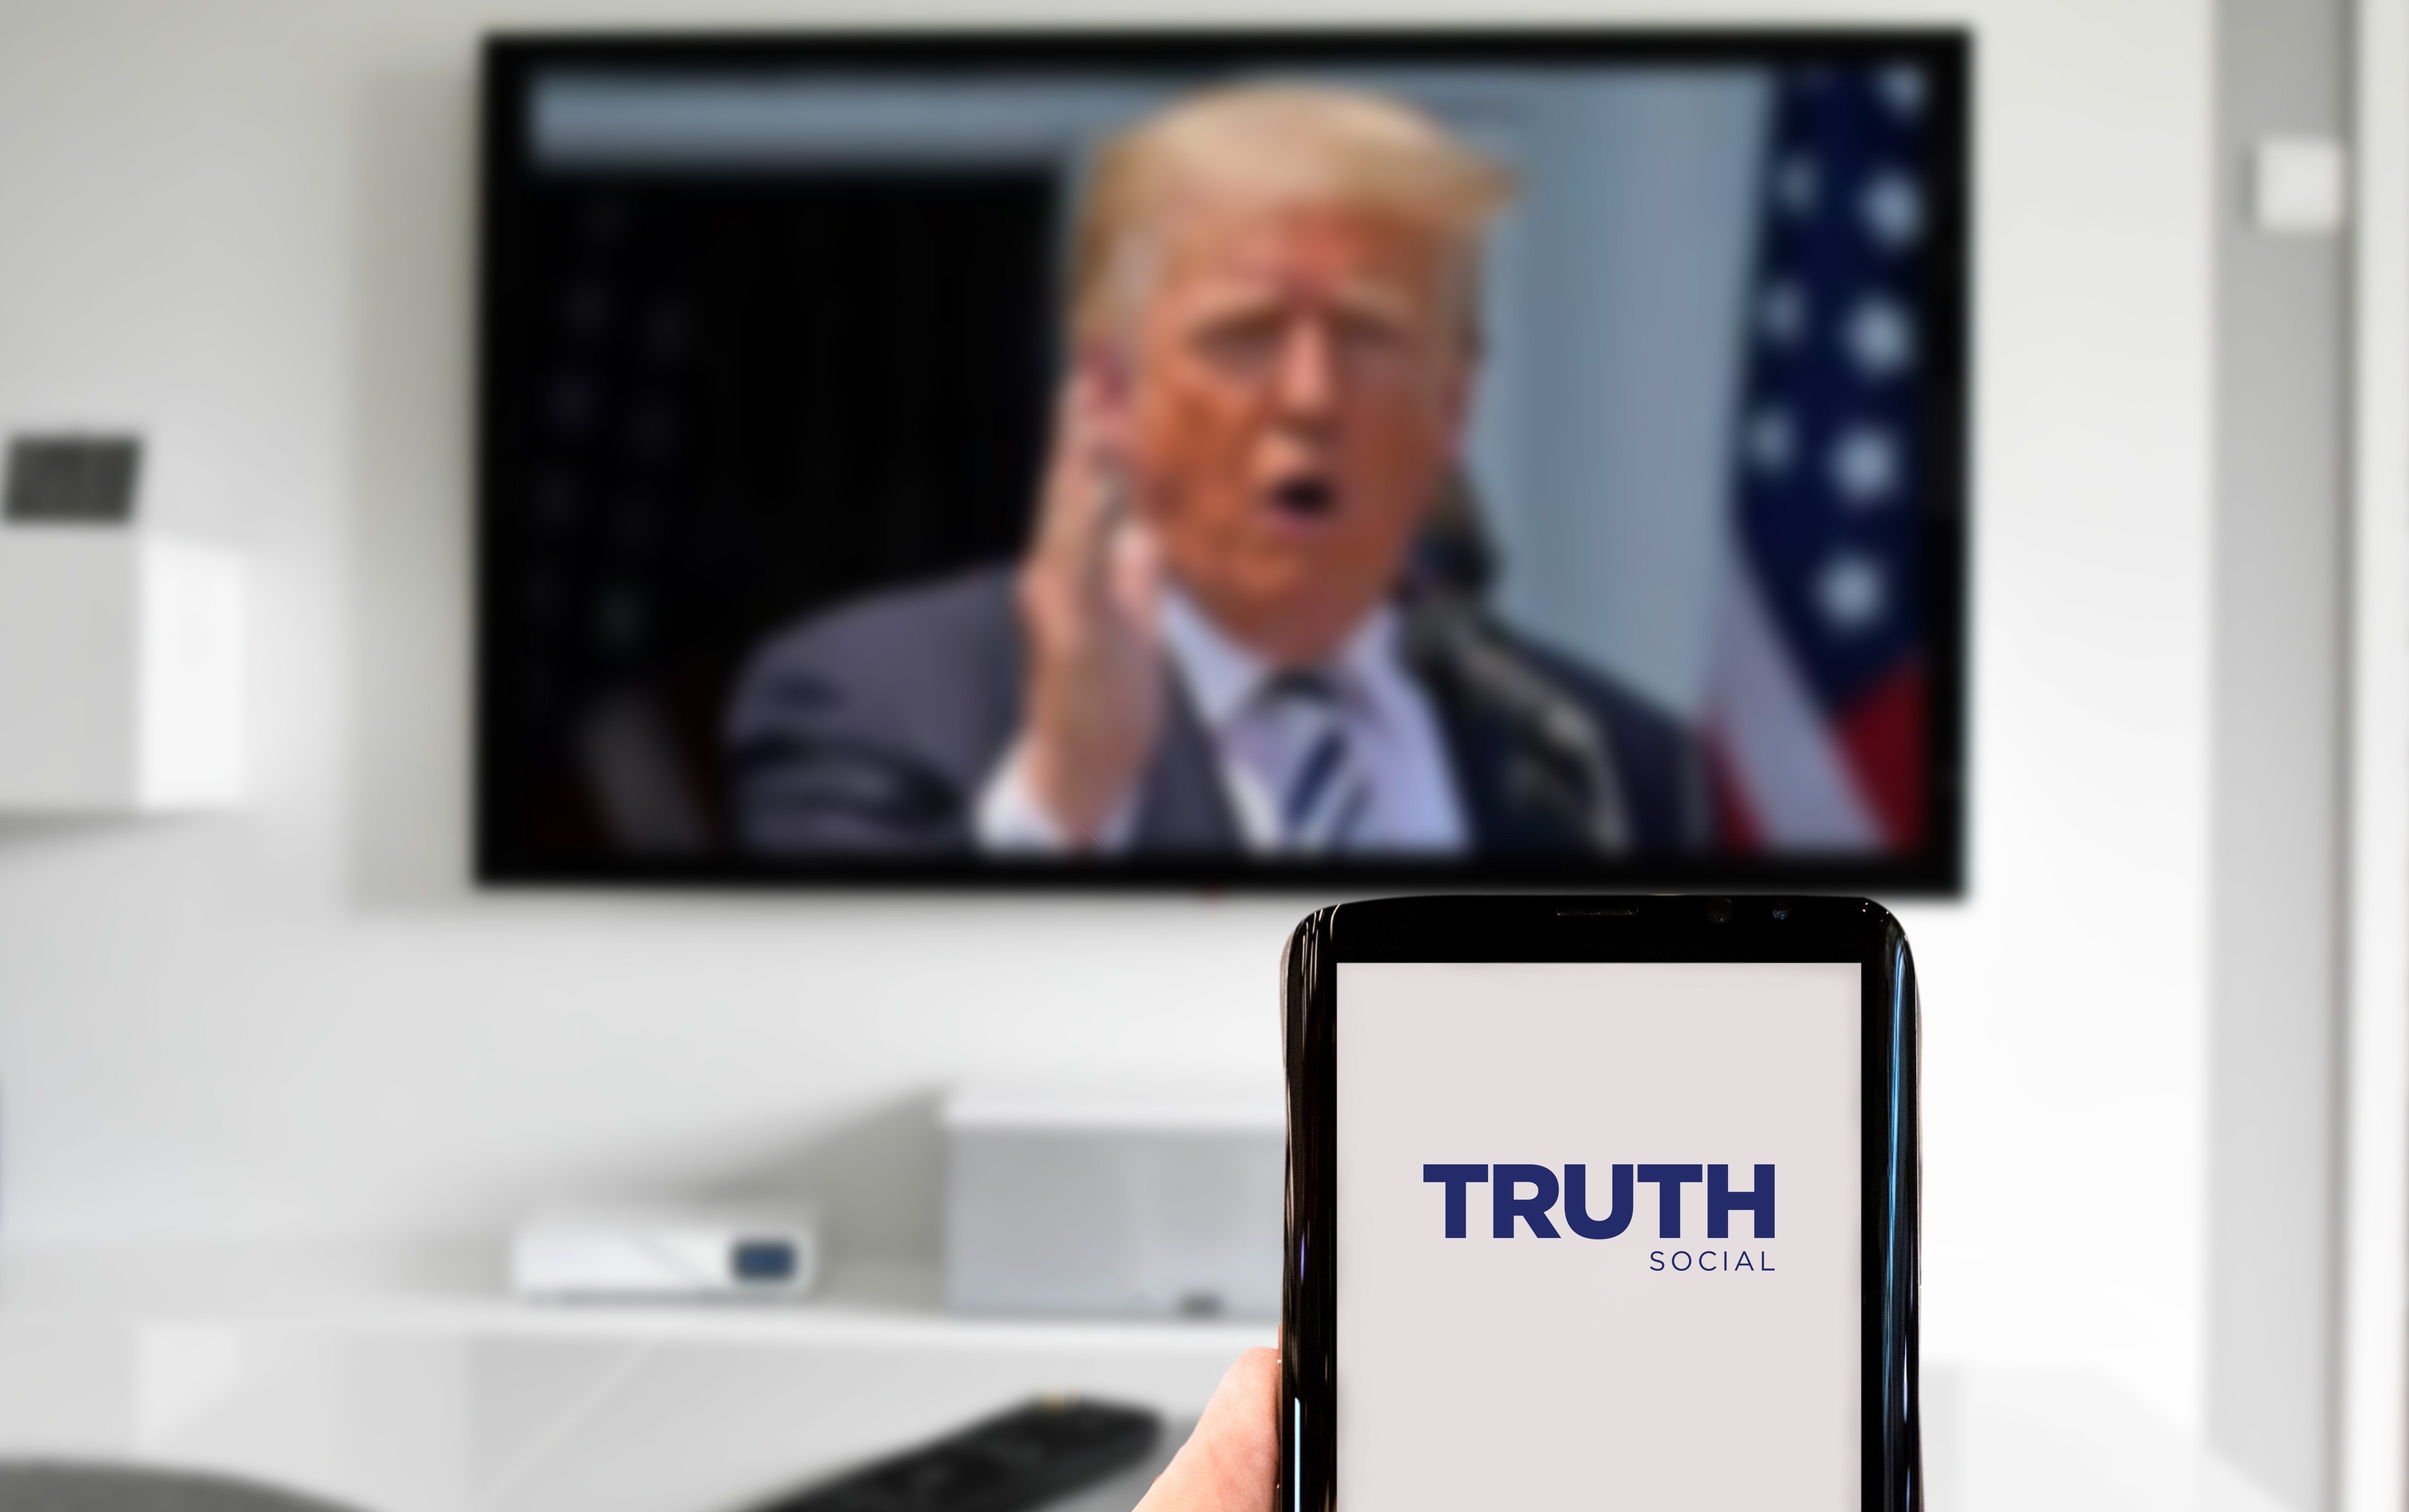 Downloads Of Donald Trump's Truth Social App Spike Following Mar-A-Lago Raid